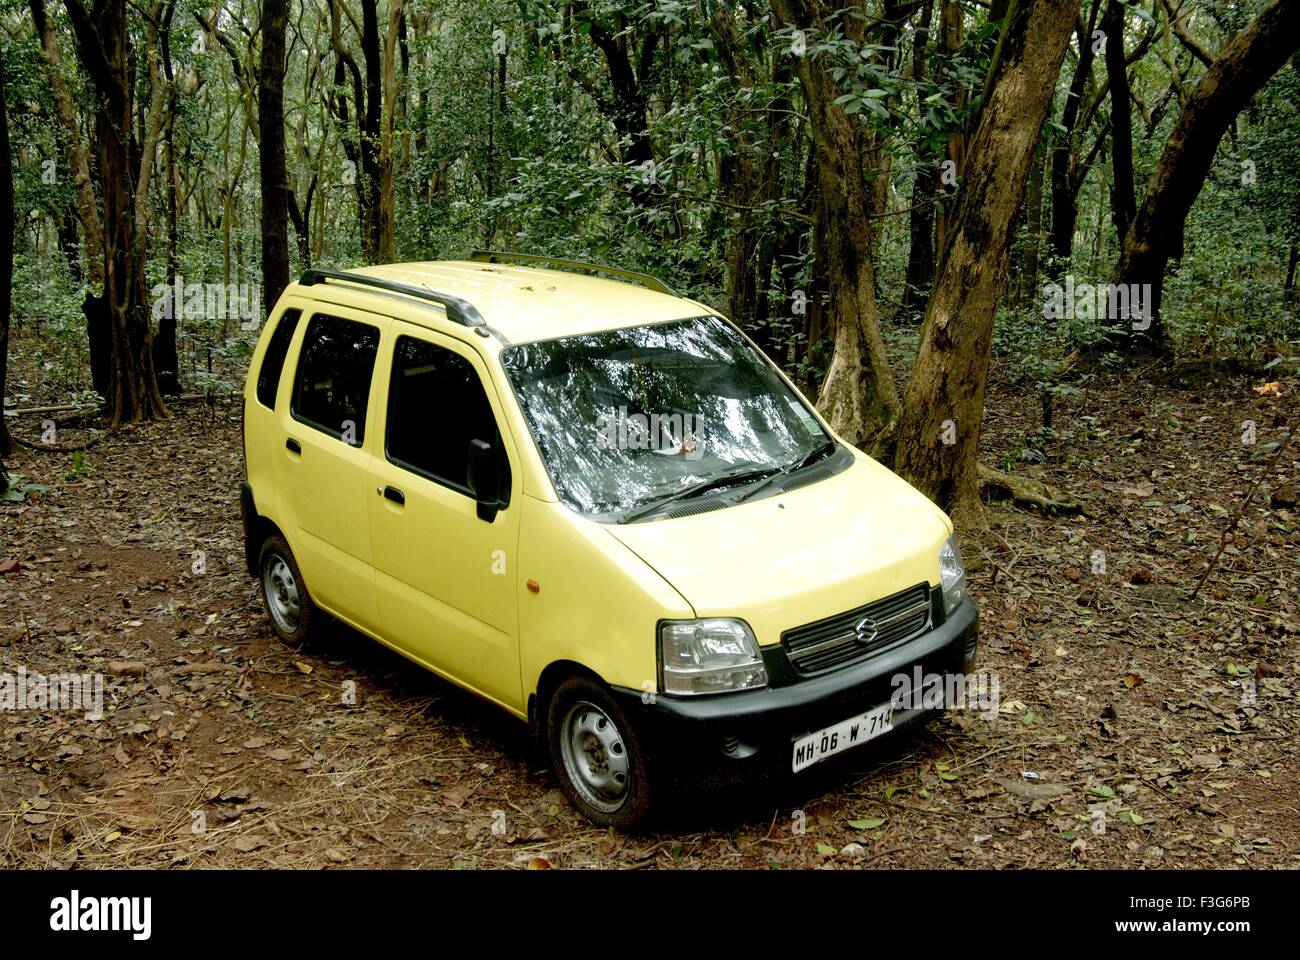 Car Waganor yellow color Maruti suzuki model 800cc at Matheran ; Maharashtra ; India Stock Photo